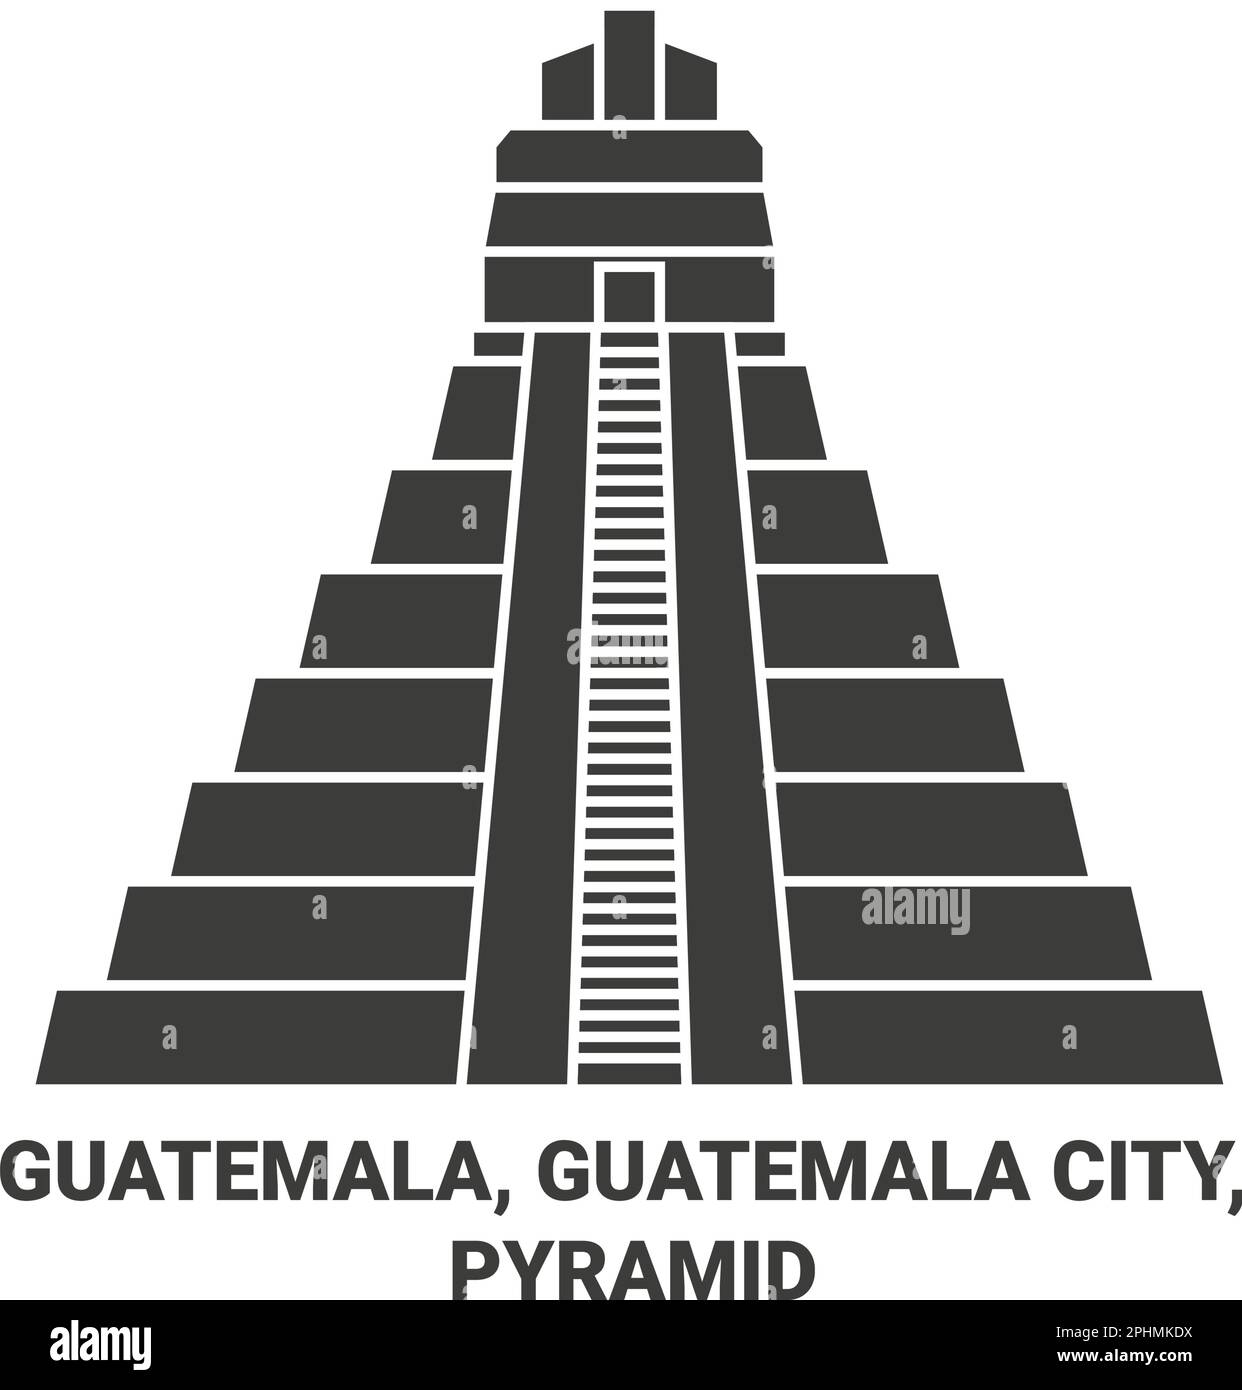 Guatemala, Guatemala City, Travels Landsmark travel landmark vector illustration Stock Vector